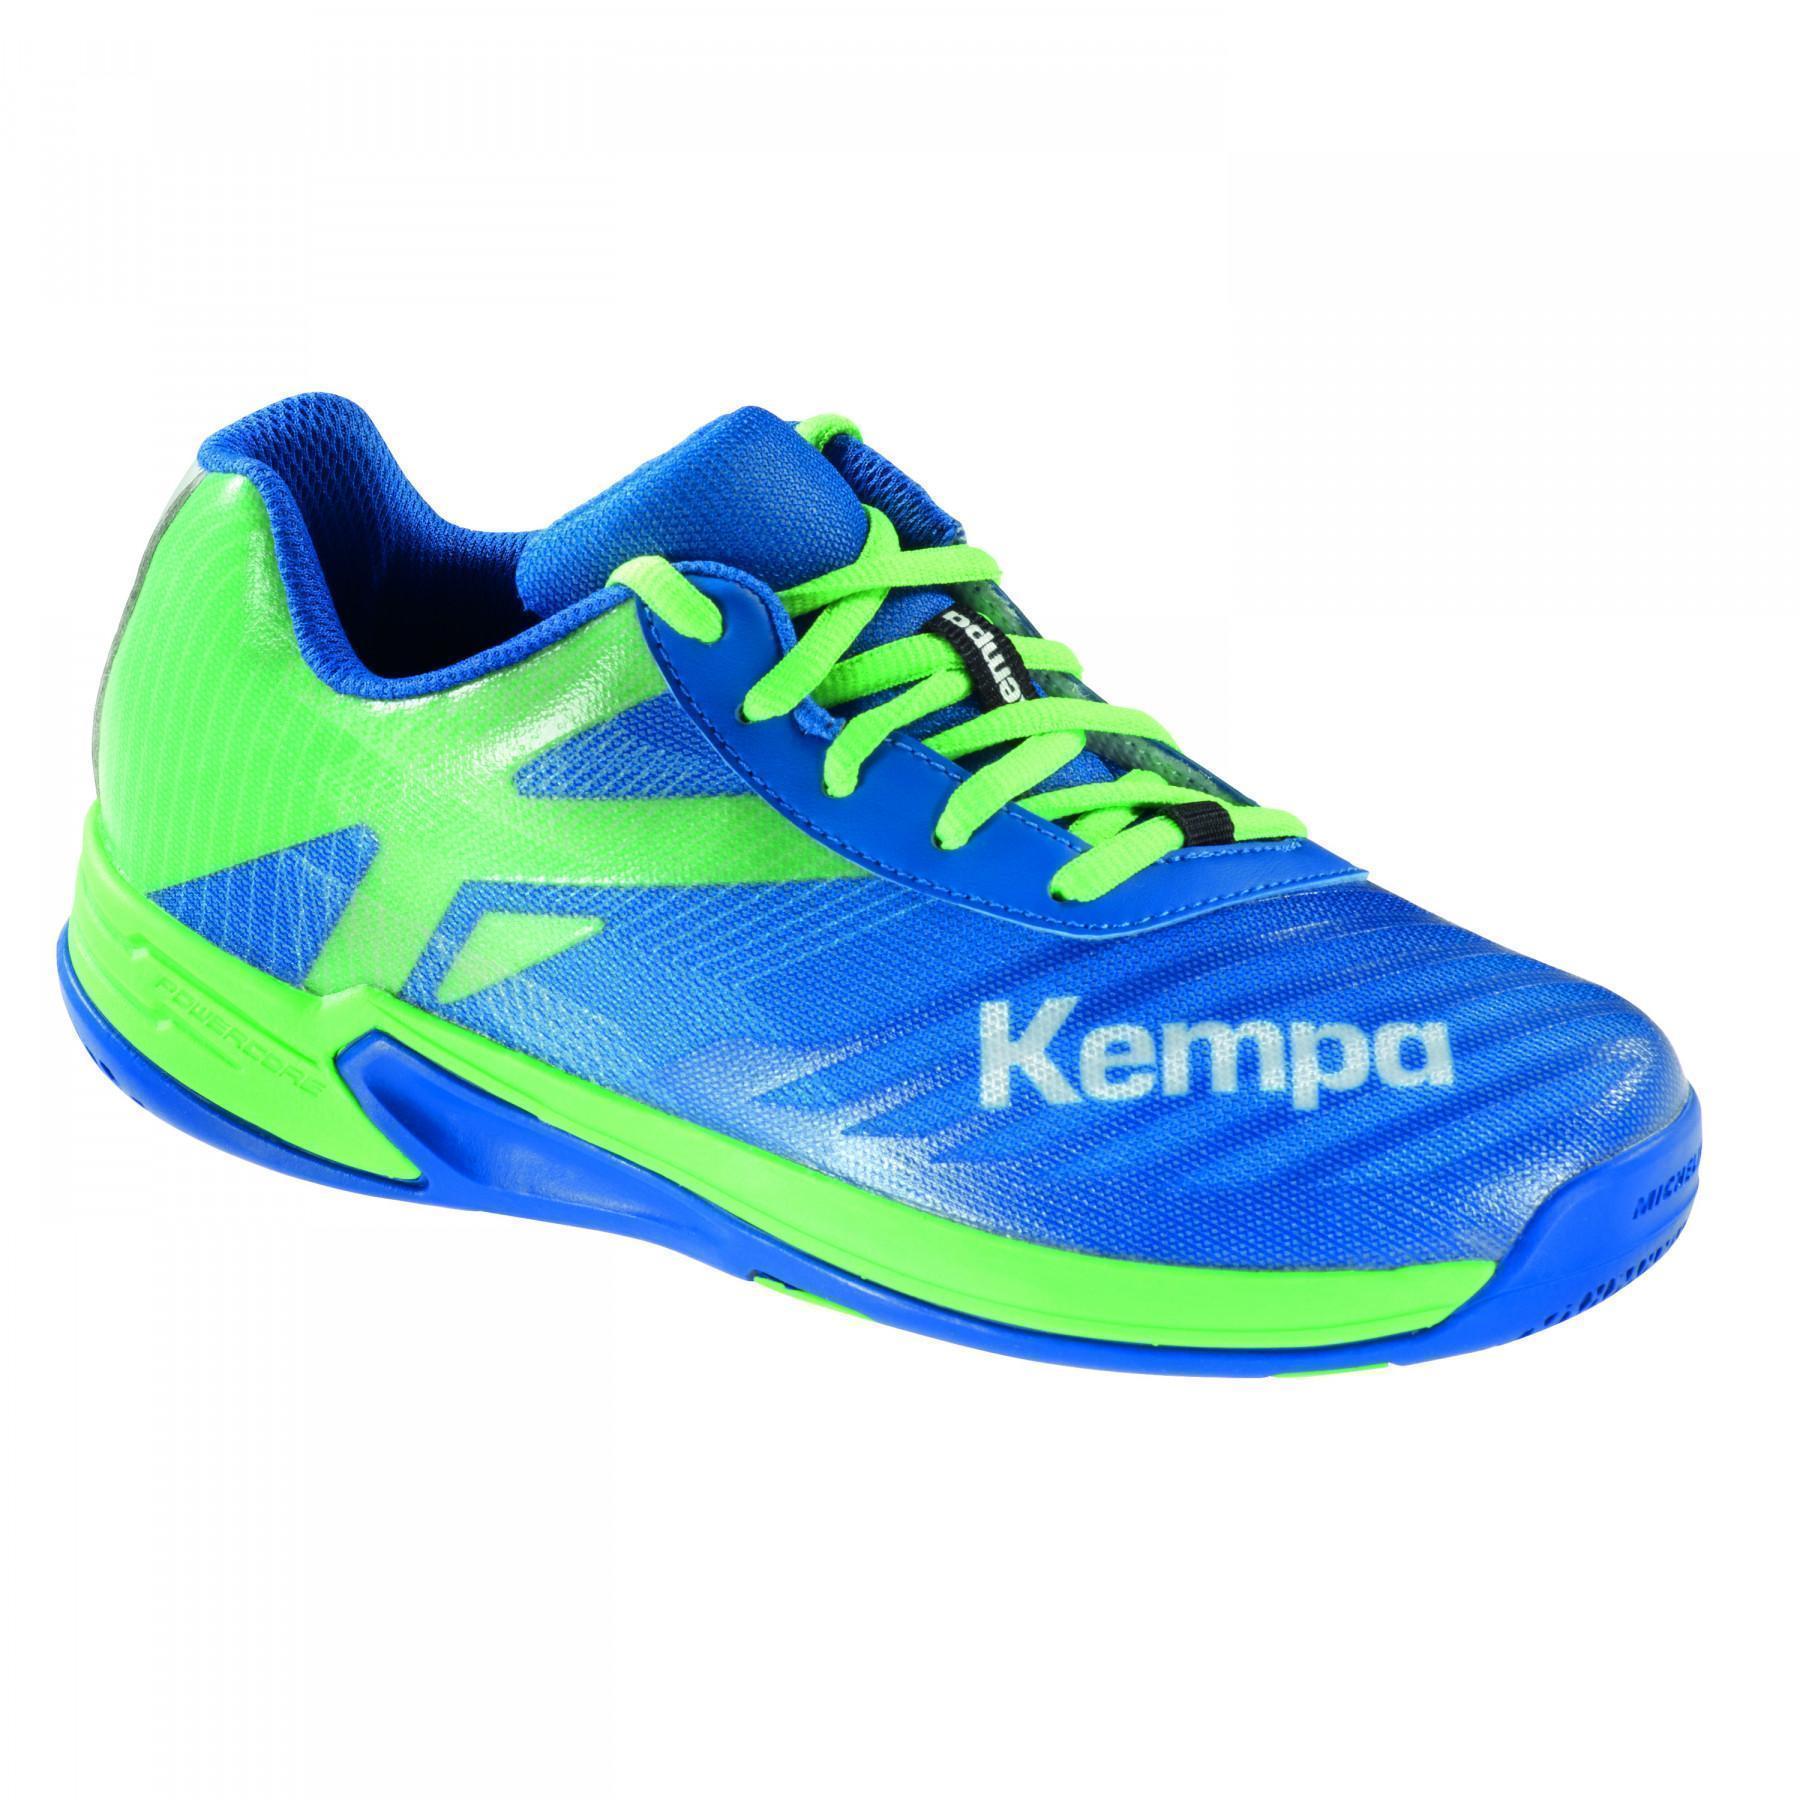 Kinderschoen zonder klittenband wing 2.0 Kempa